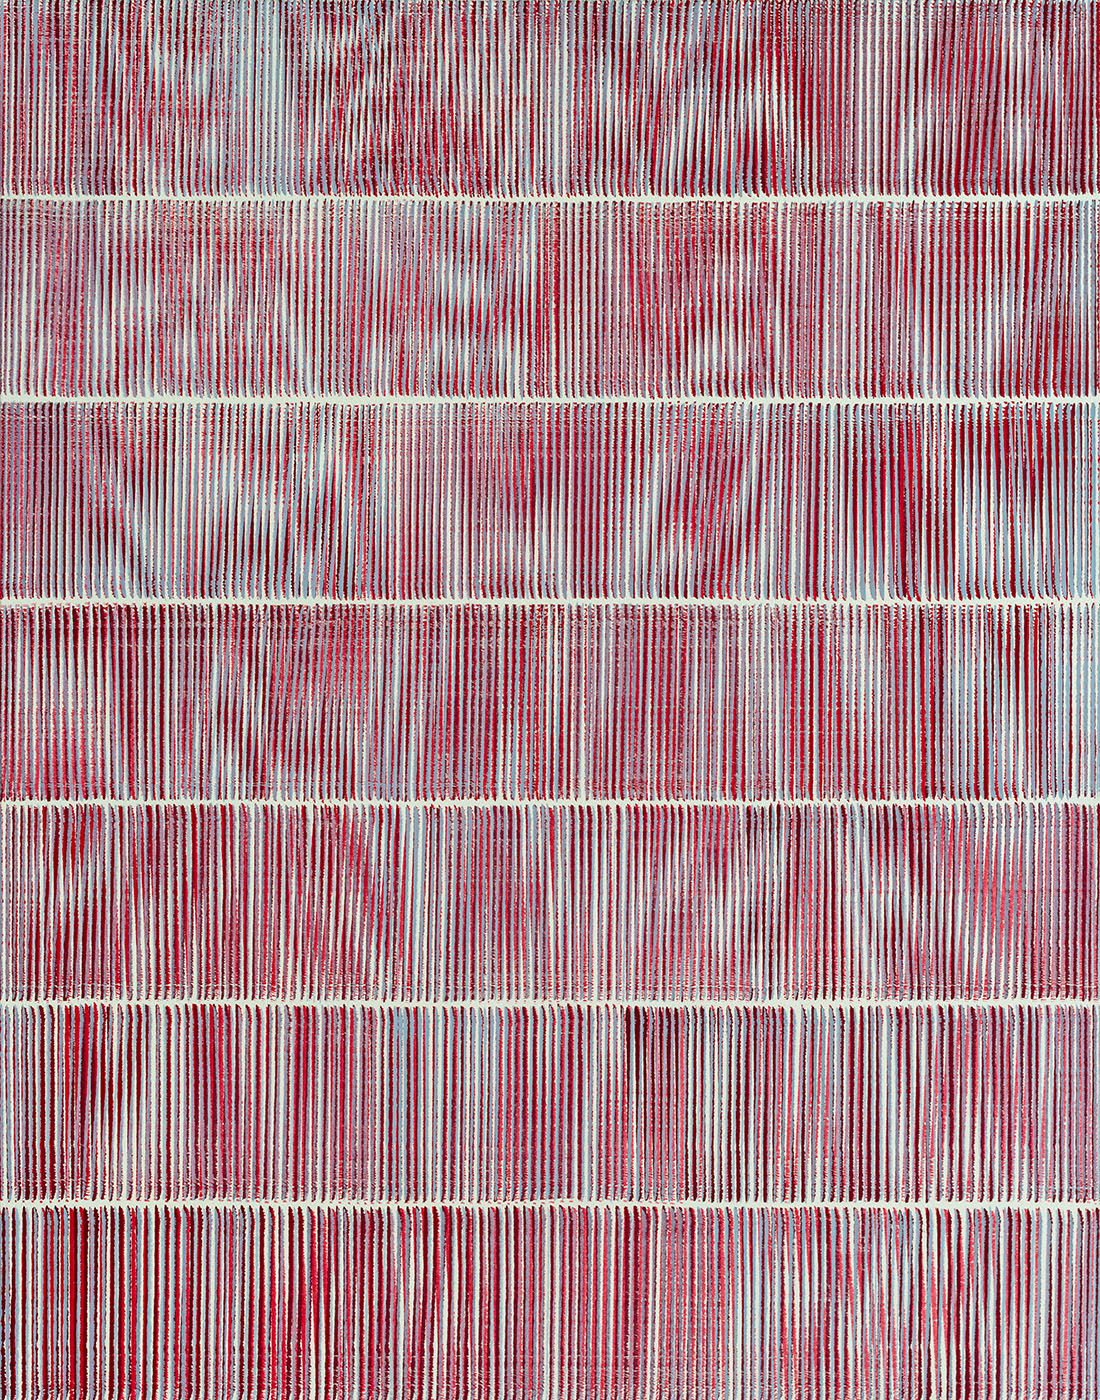 Nikola Dimitrov, Cassandra II, 2019, Pigmente, Bindemittel auf Leinwand, 140 × 110 cm